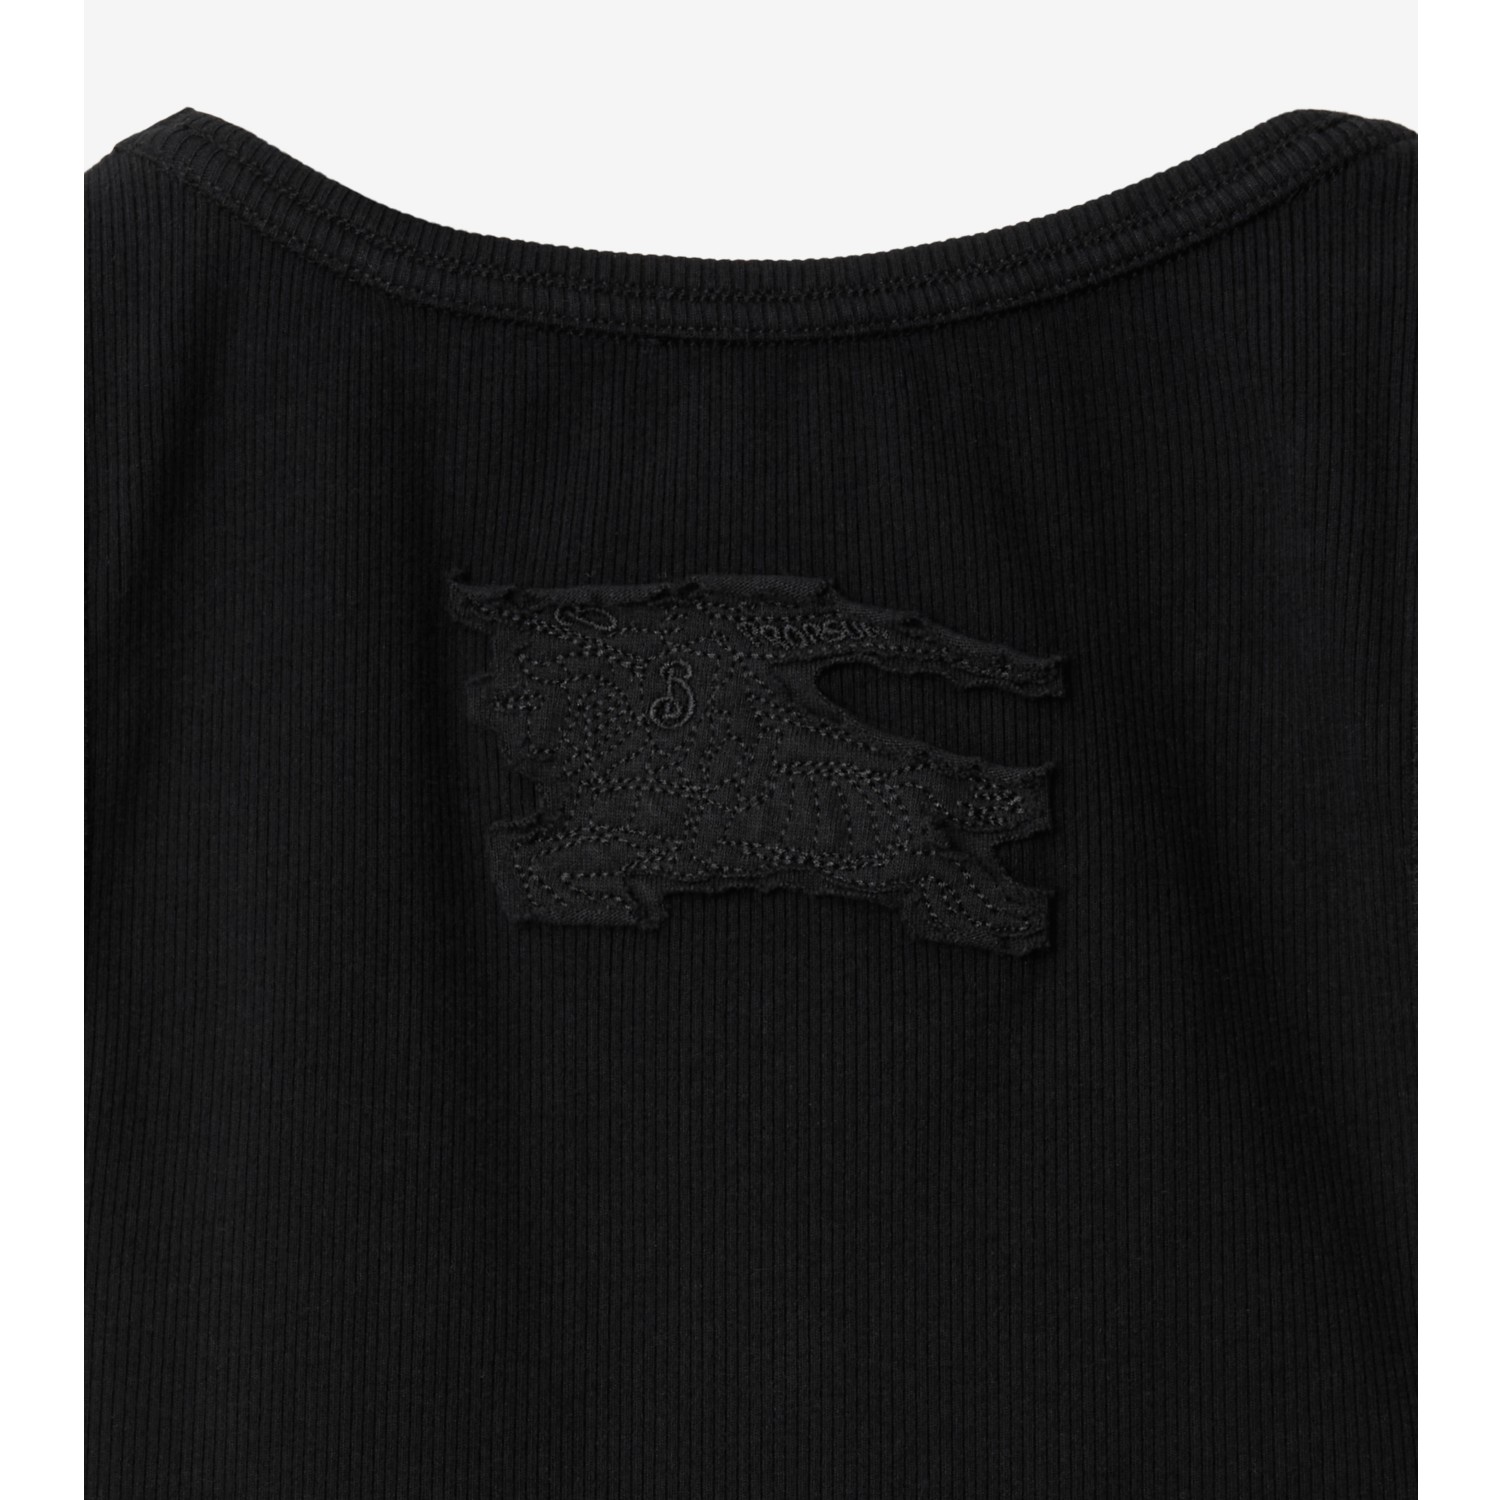 Camiseta sin mangas en mezcla de algodón elástico